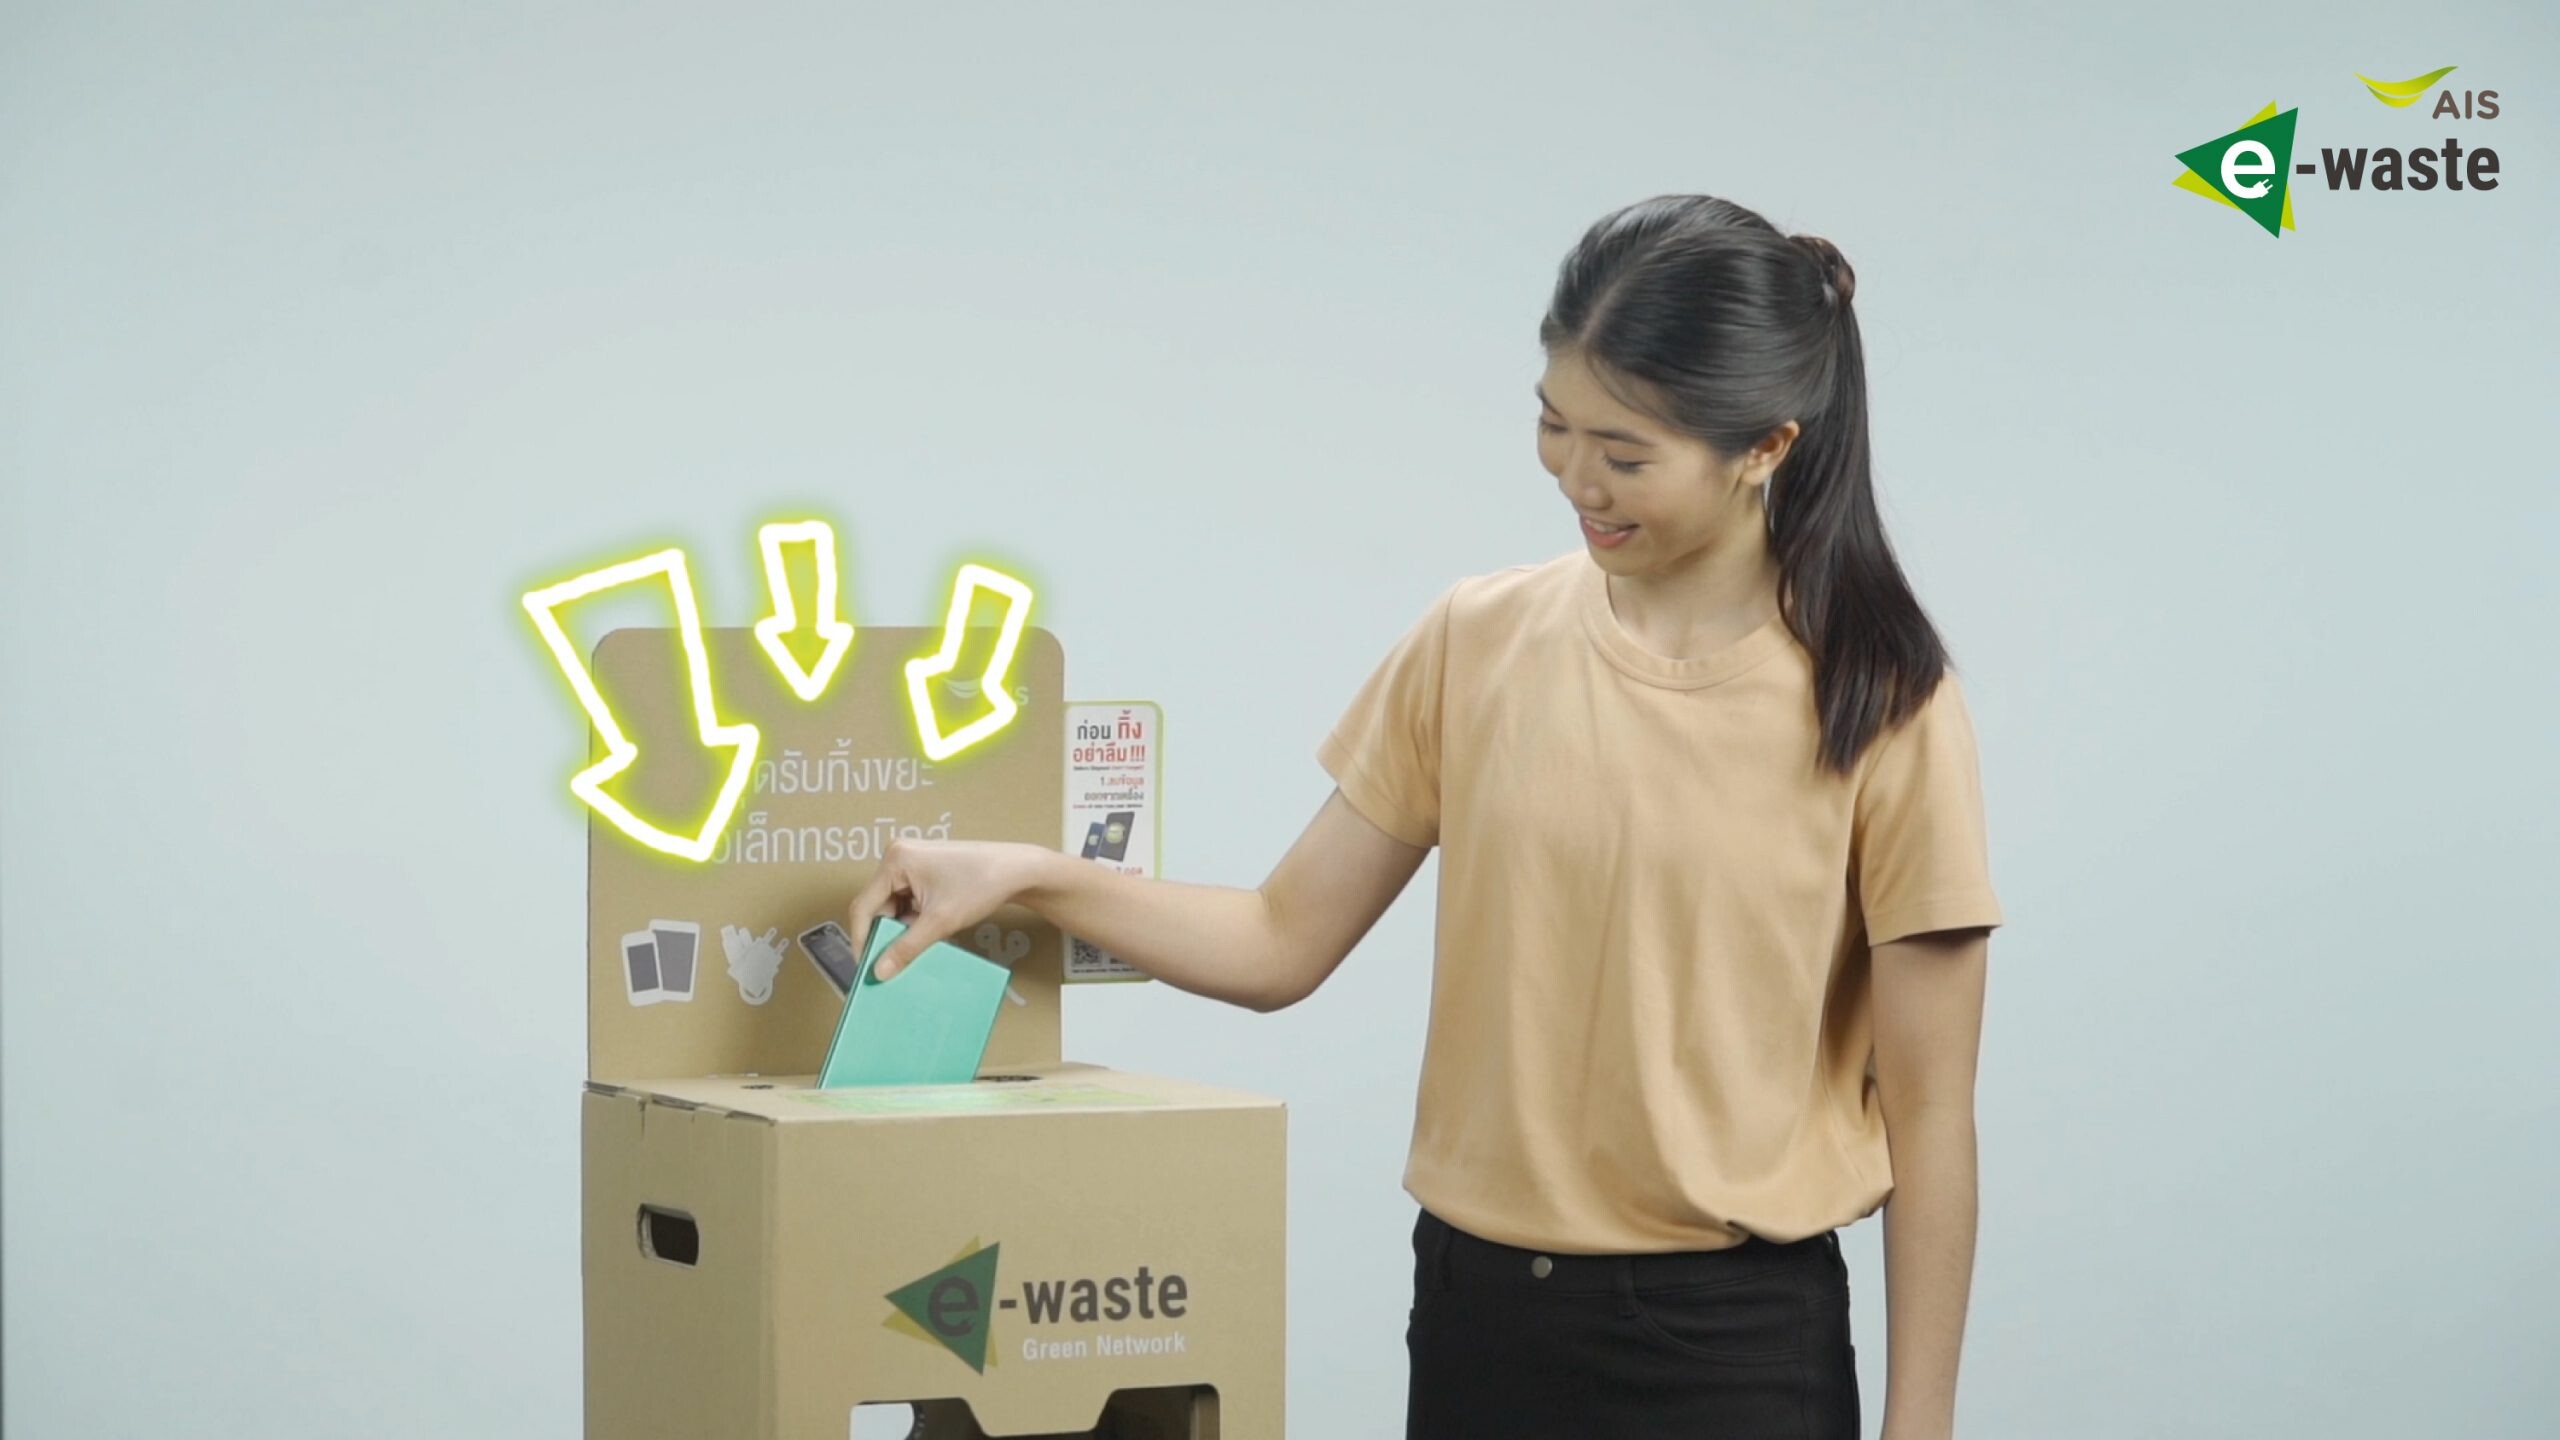 AIS ตอกย้ำภารกิจ "คนไทย ไร้ E-Waste" ในวัน International E-Waste Day 2021 ตั้งเป้าสู่การเป็น Hub ด้านองค์ความรู้และจัดการขยะอิเล็กทรอนิกส์อย่างยั่งยืน เดินหน้าสร้างการมีส่วนร่วมทุกภาคส่วน